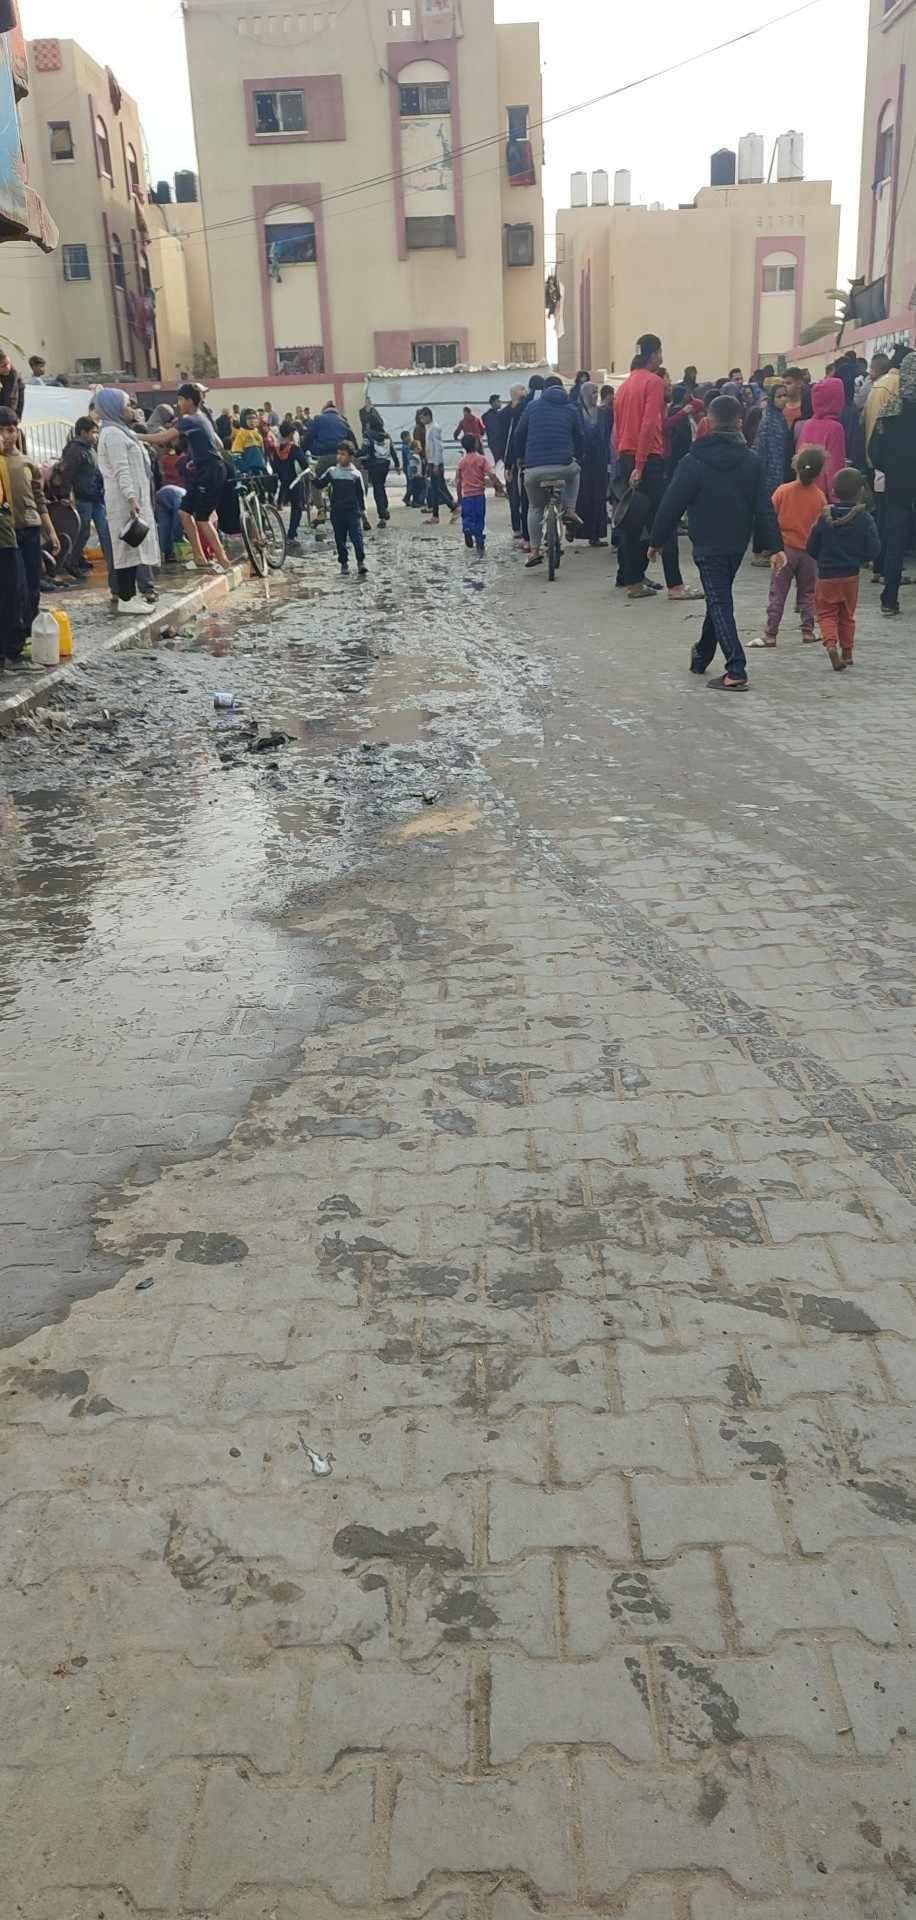 Raw sewage flows through the streets.